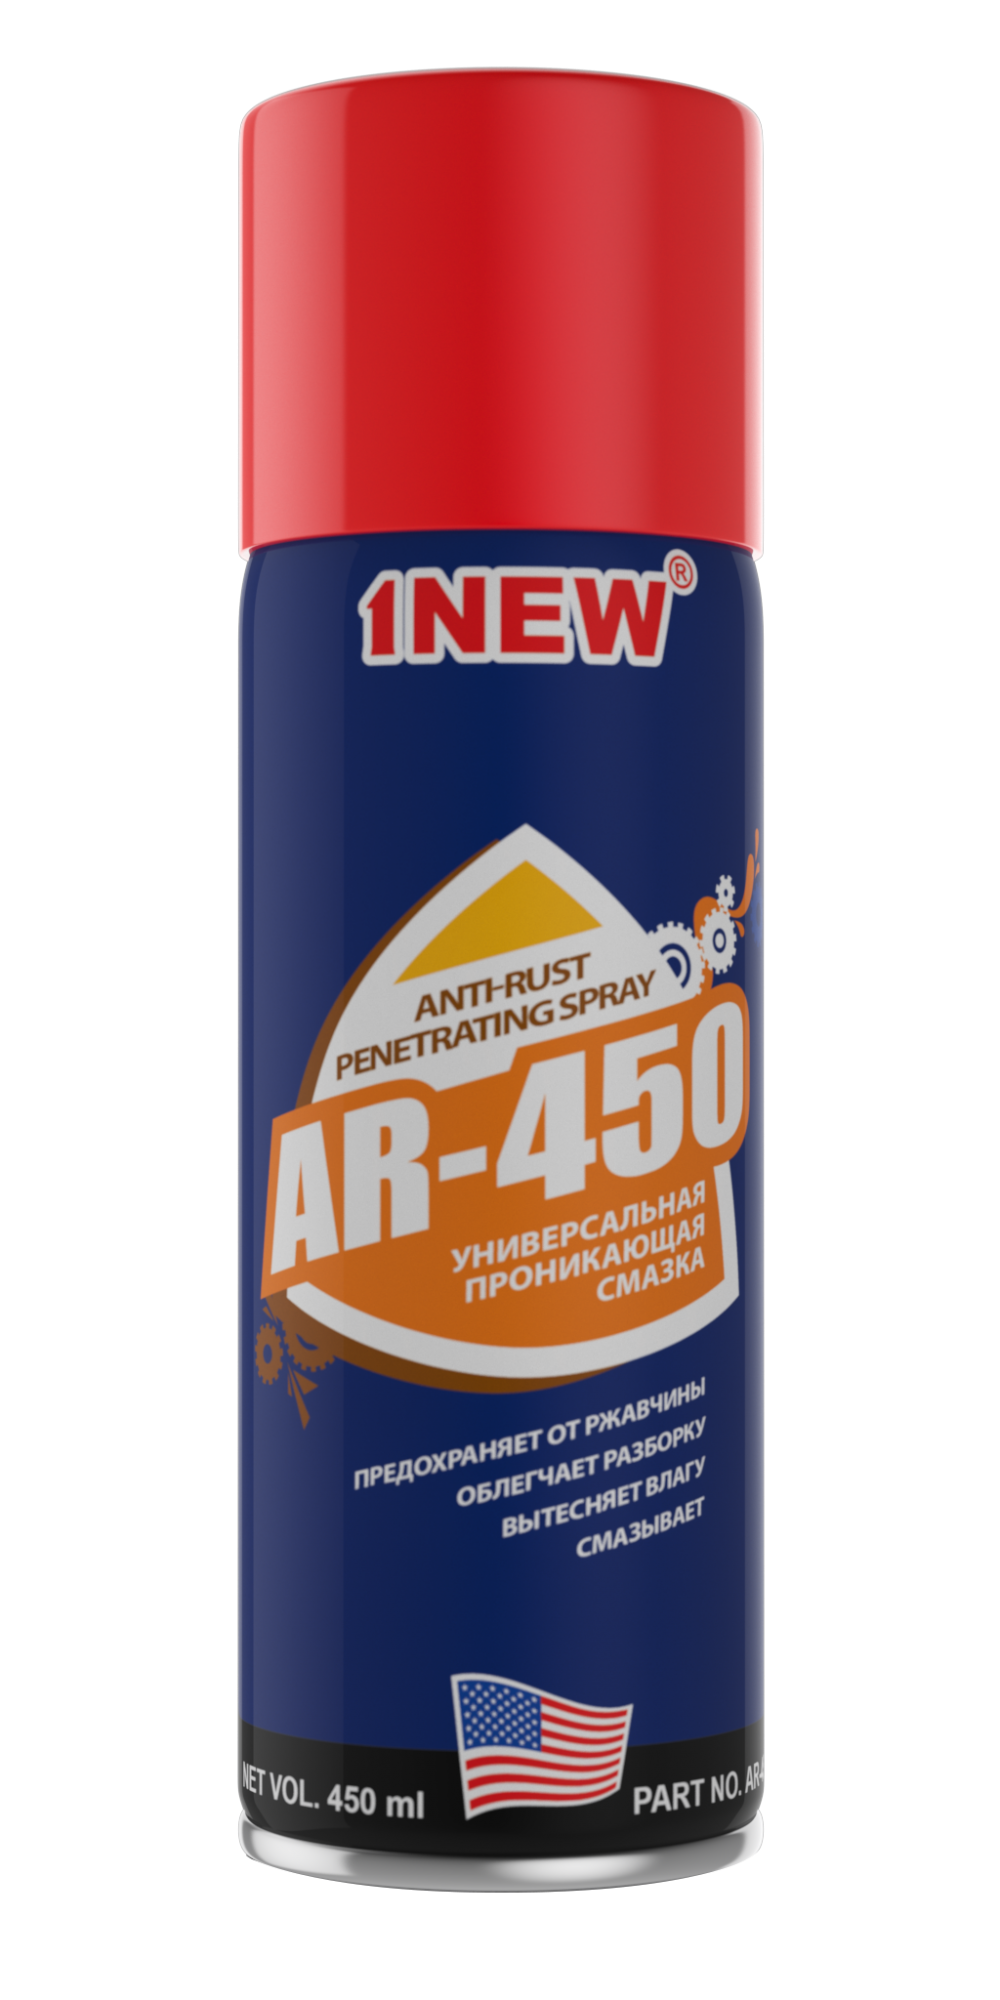 Проникающая смазка антикоррозийная(жидкий ключ)  1-NEW  450 мл. аэрозоль  AR-450